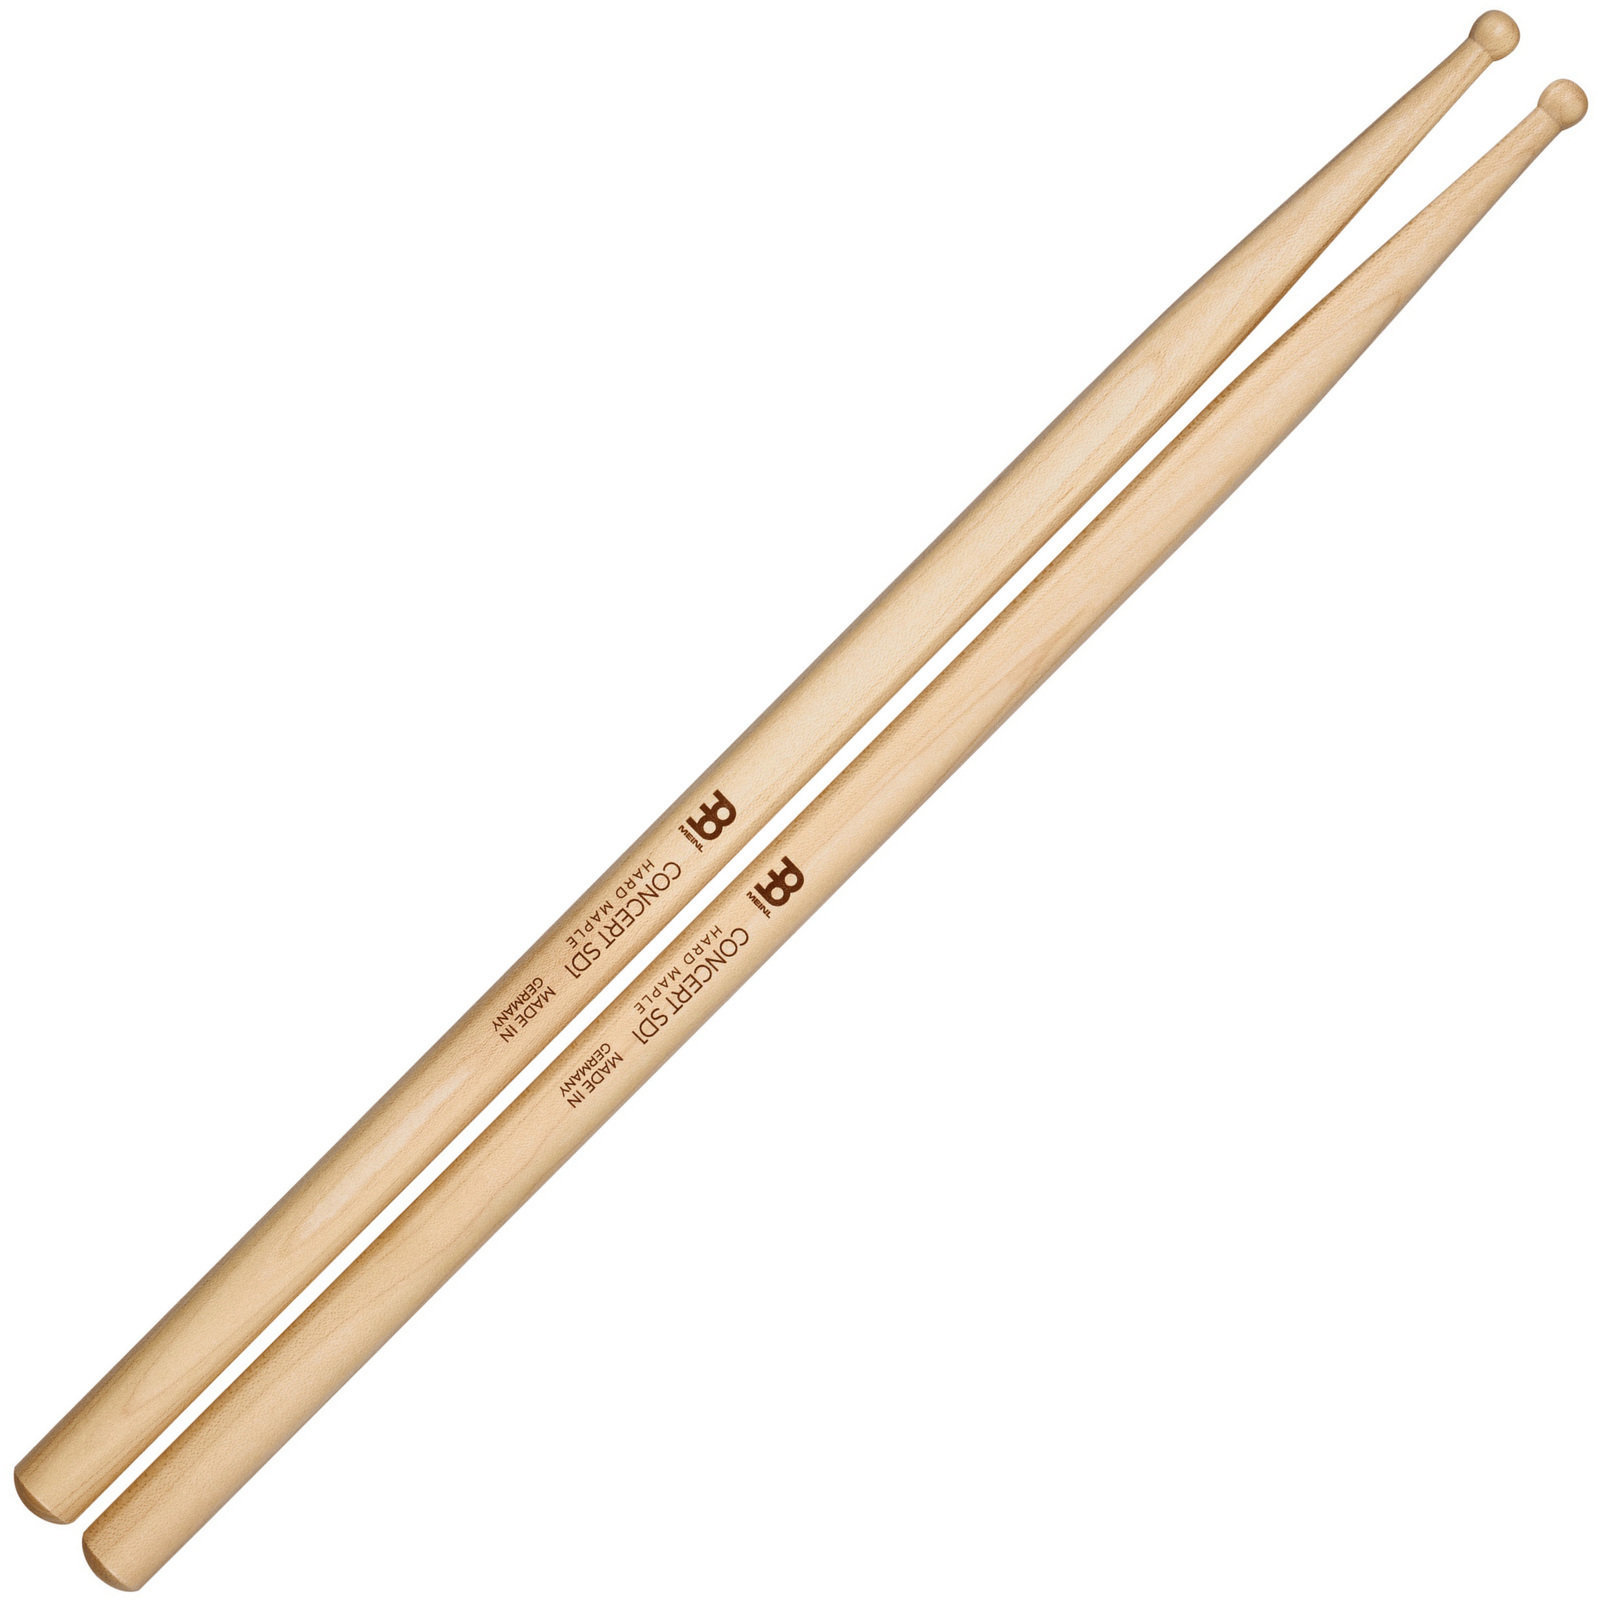 Rumpukapulat Meinl Concert SD1 Wood Tip Drum Sticks